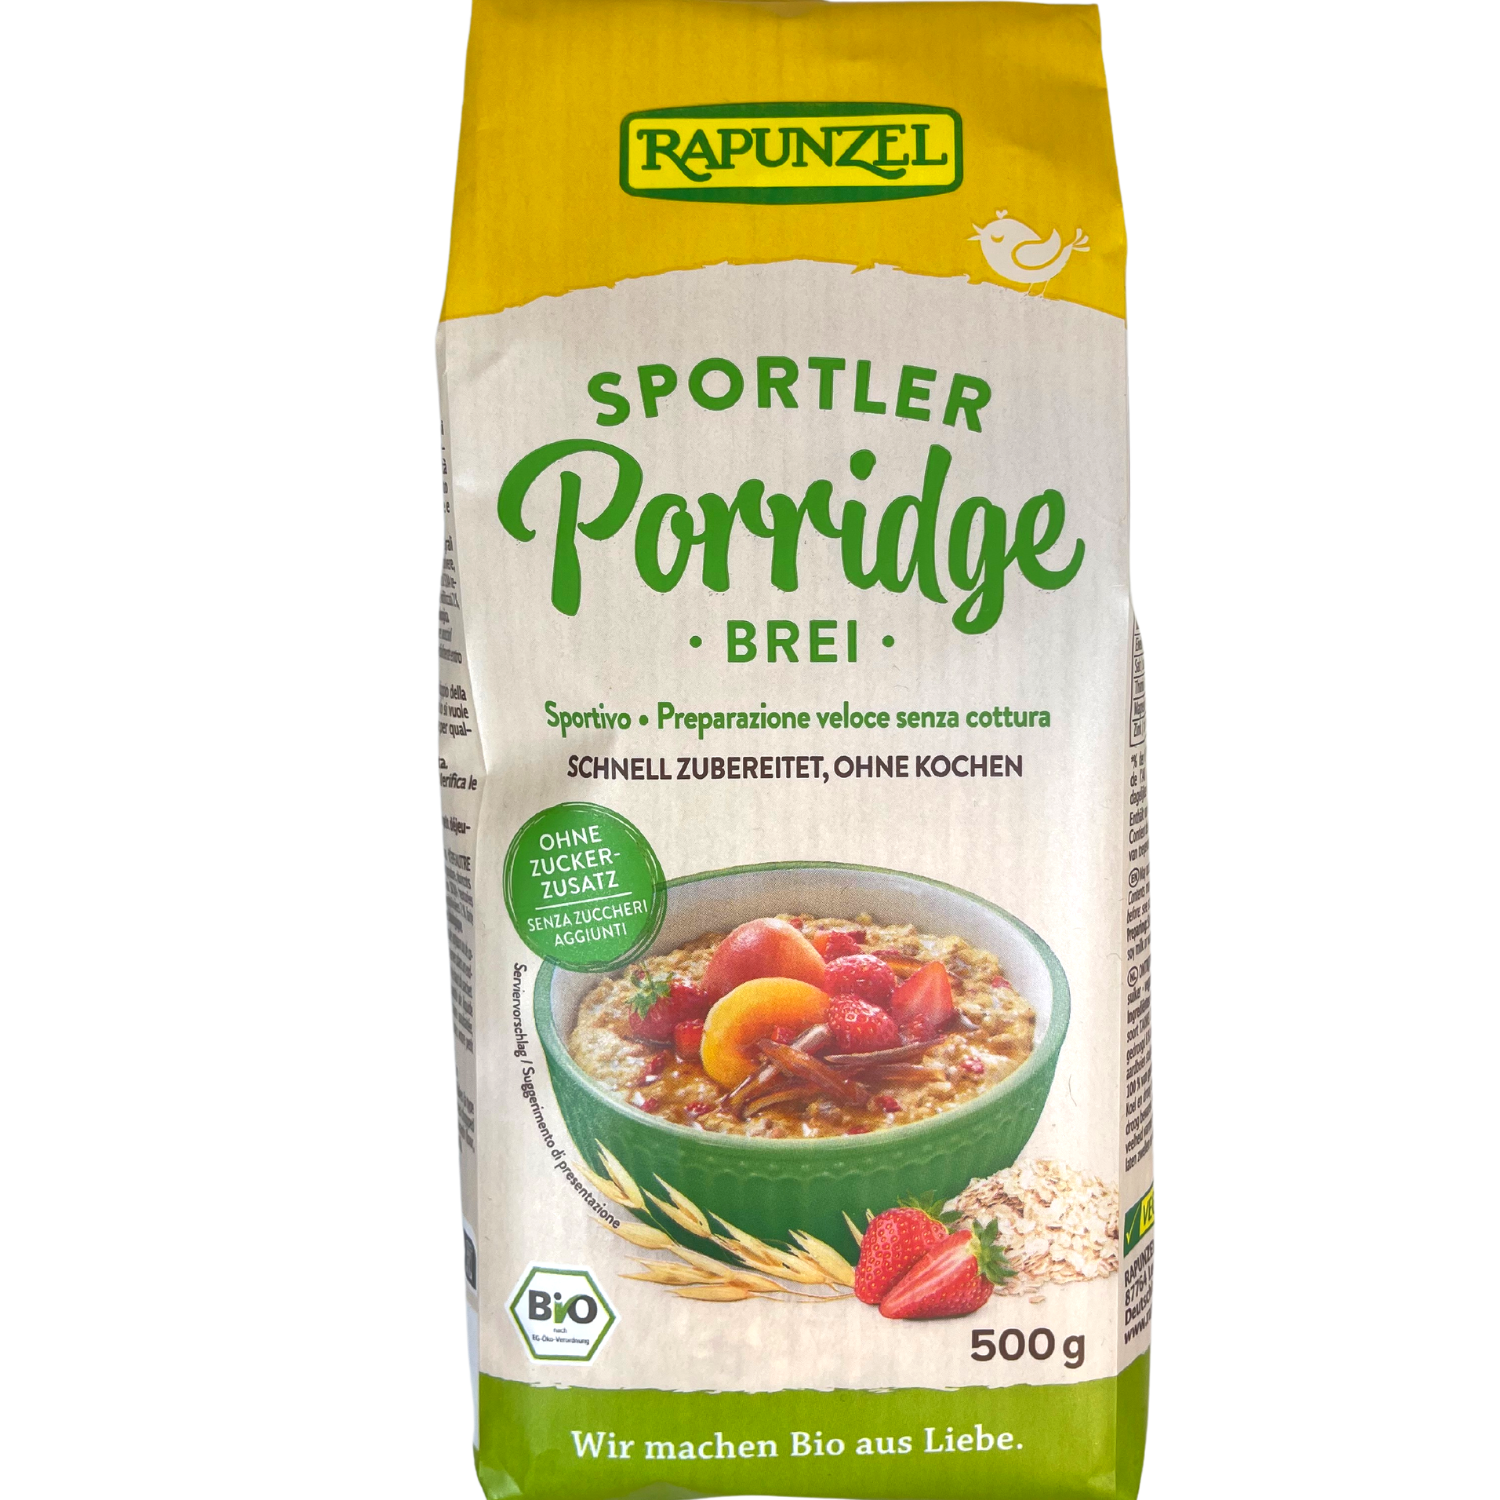 Porridge sportivo 500g